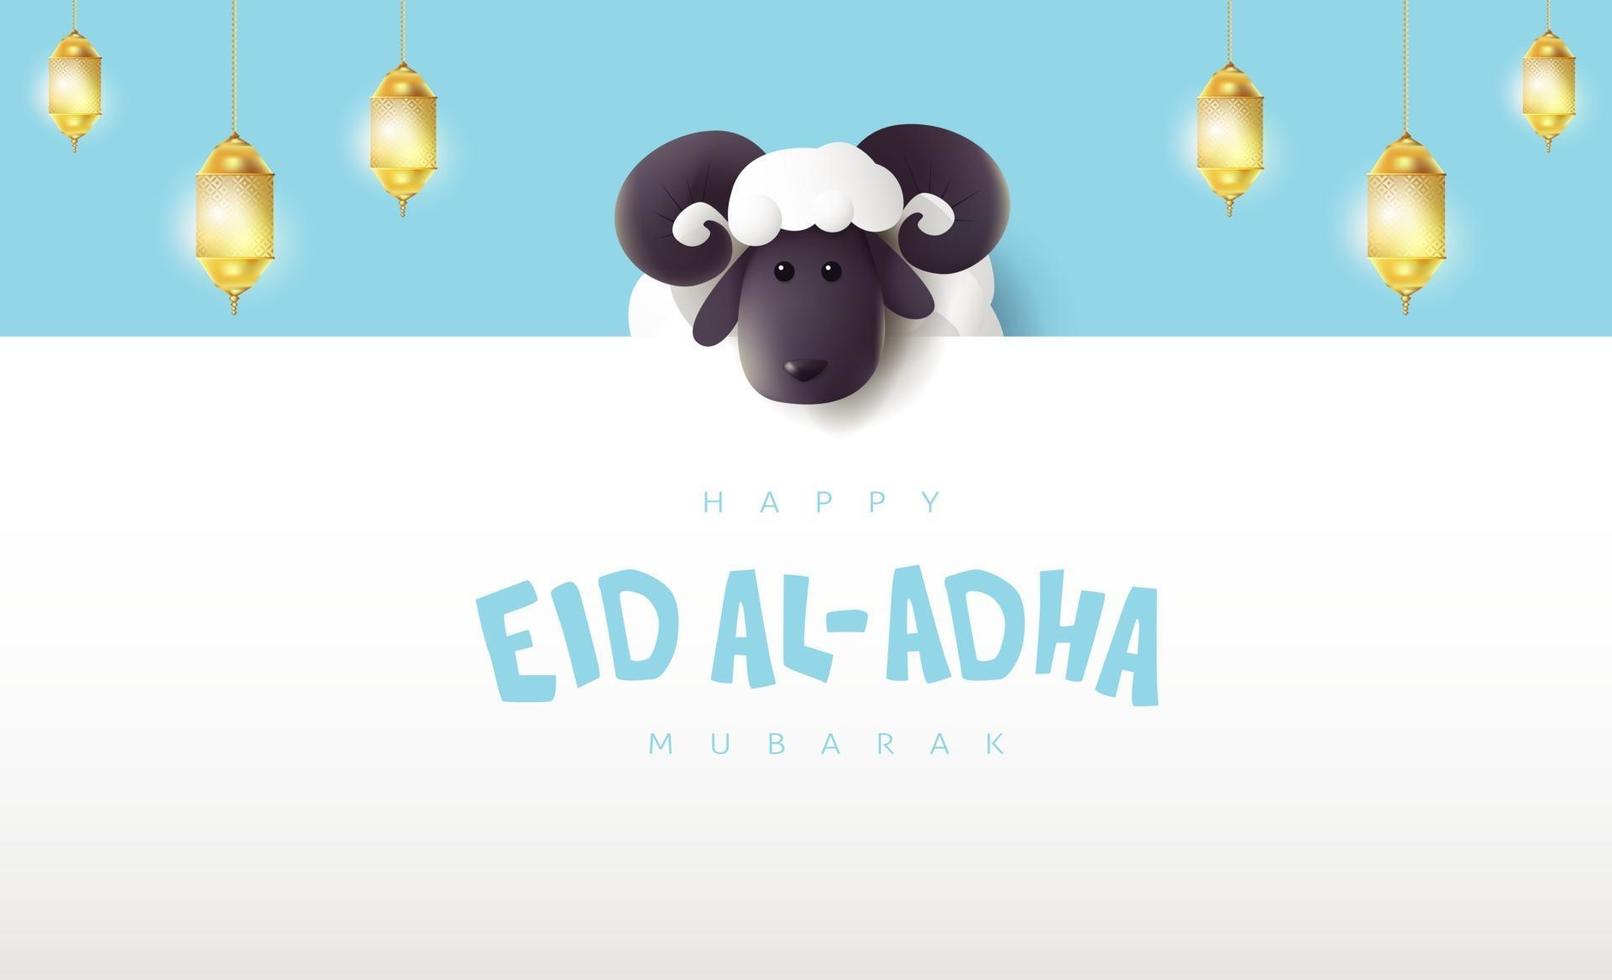 Eid Al Adha Mubarak the celebration of Muslim community festival calligraphy with White sheep vector